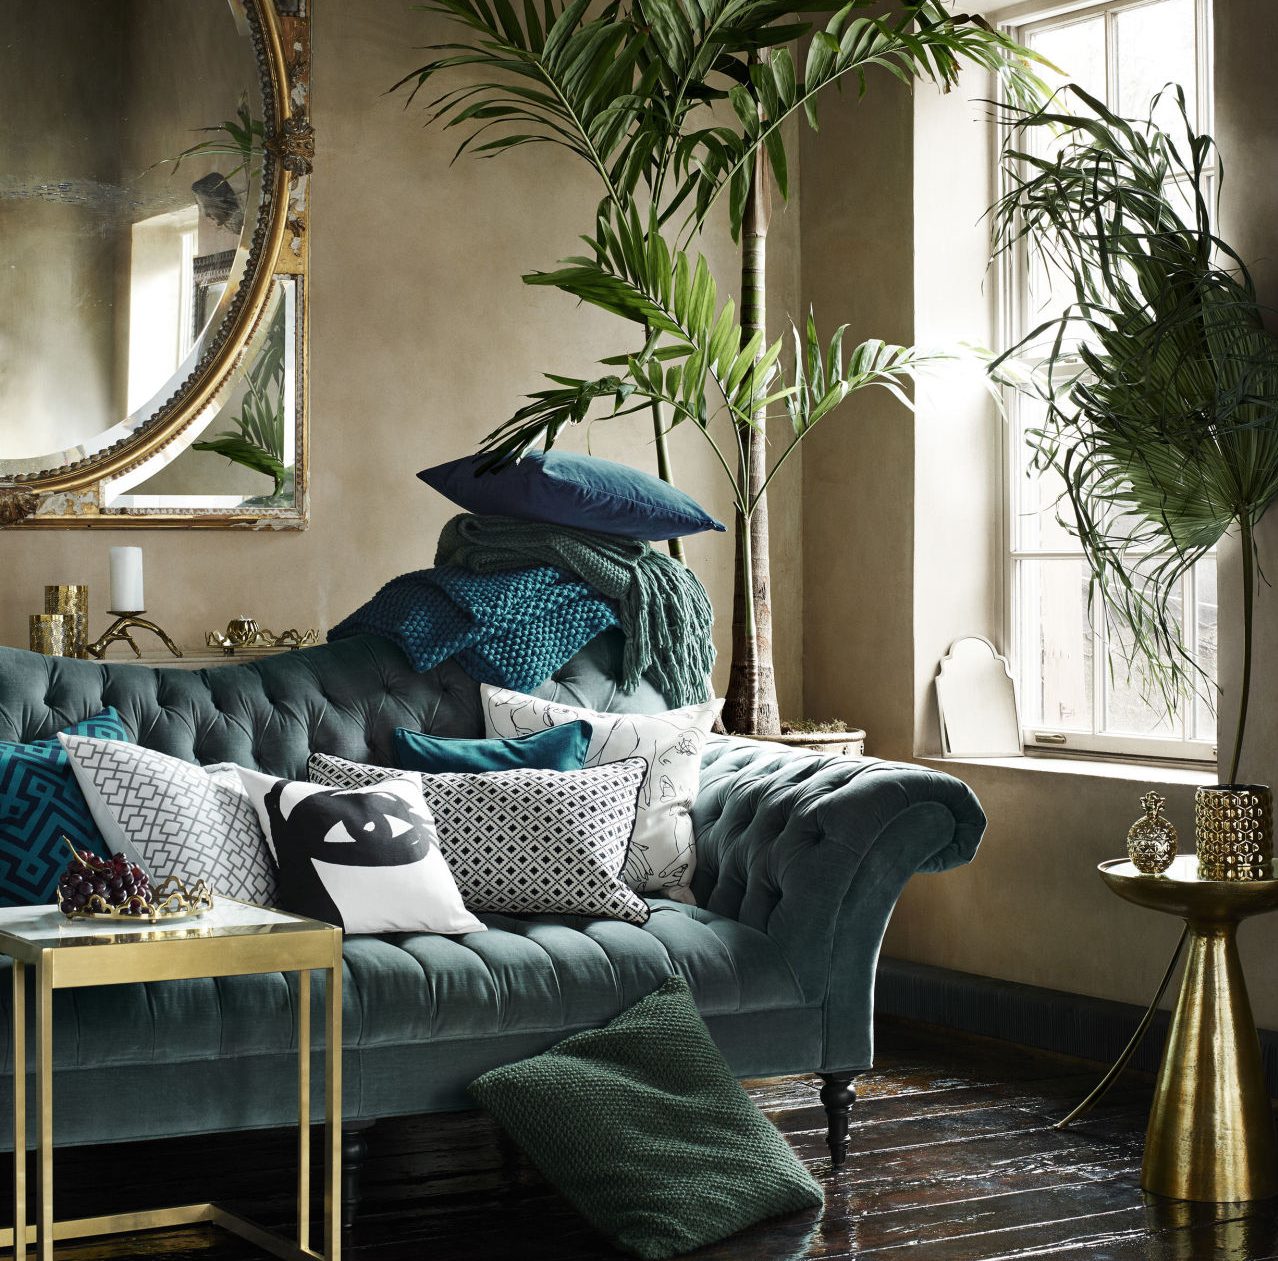 How To Make Your Home Look More Expensive - Sofa Designed By Swedish Designer Evelina Kravaev Söderberg.